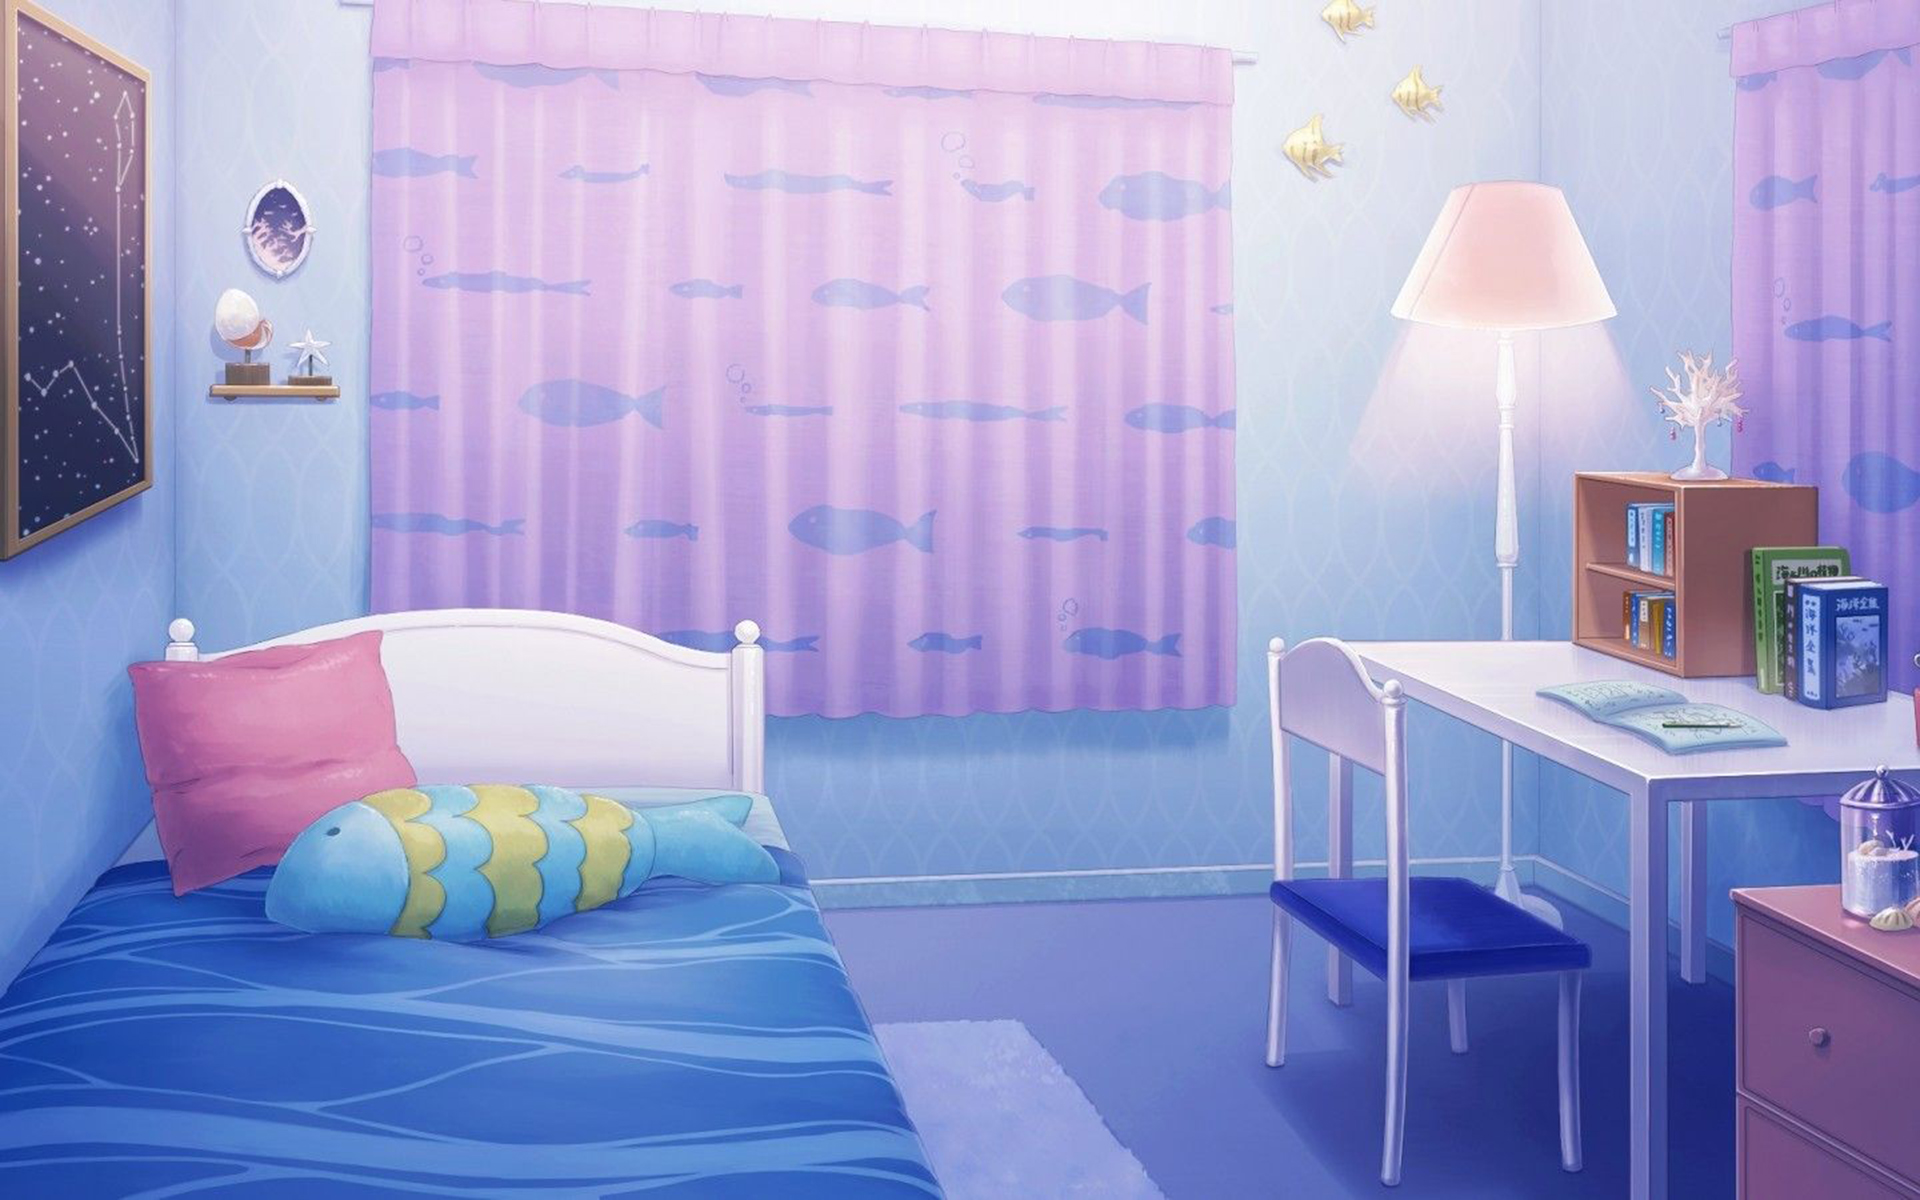 Anime bedroom panorama by FutureRender on DeviantArt